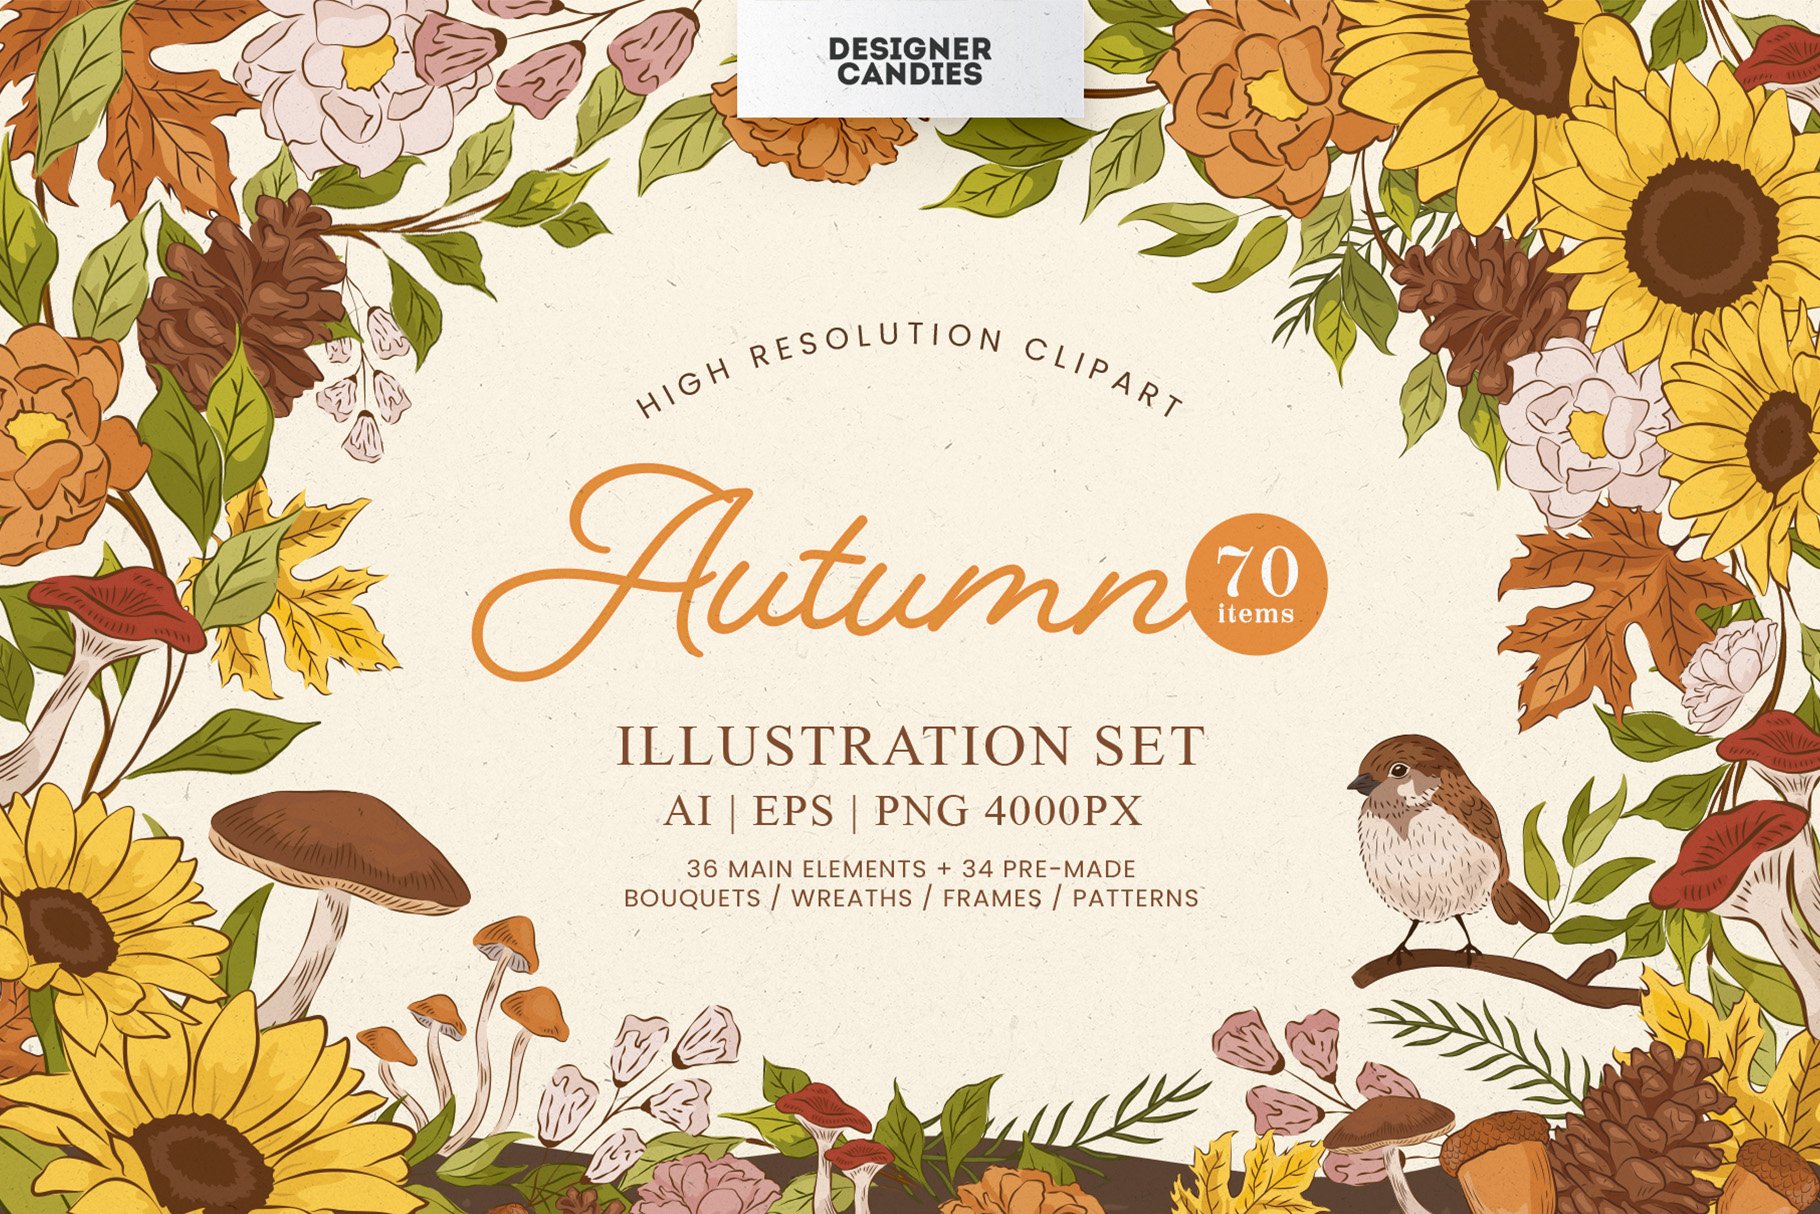 Fall Autumn Illustrations Set cover image.